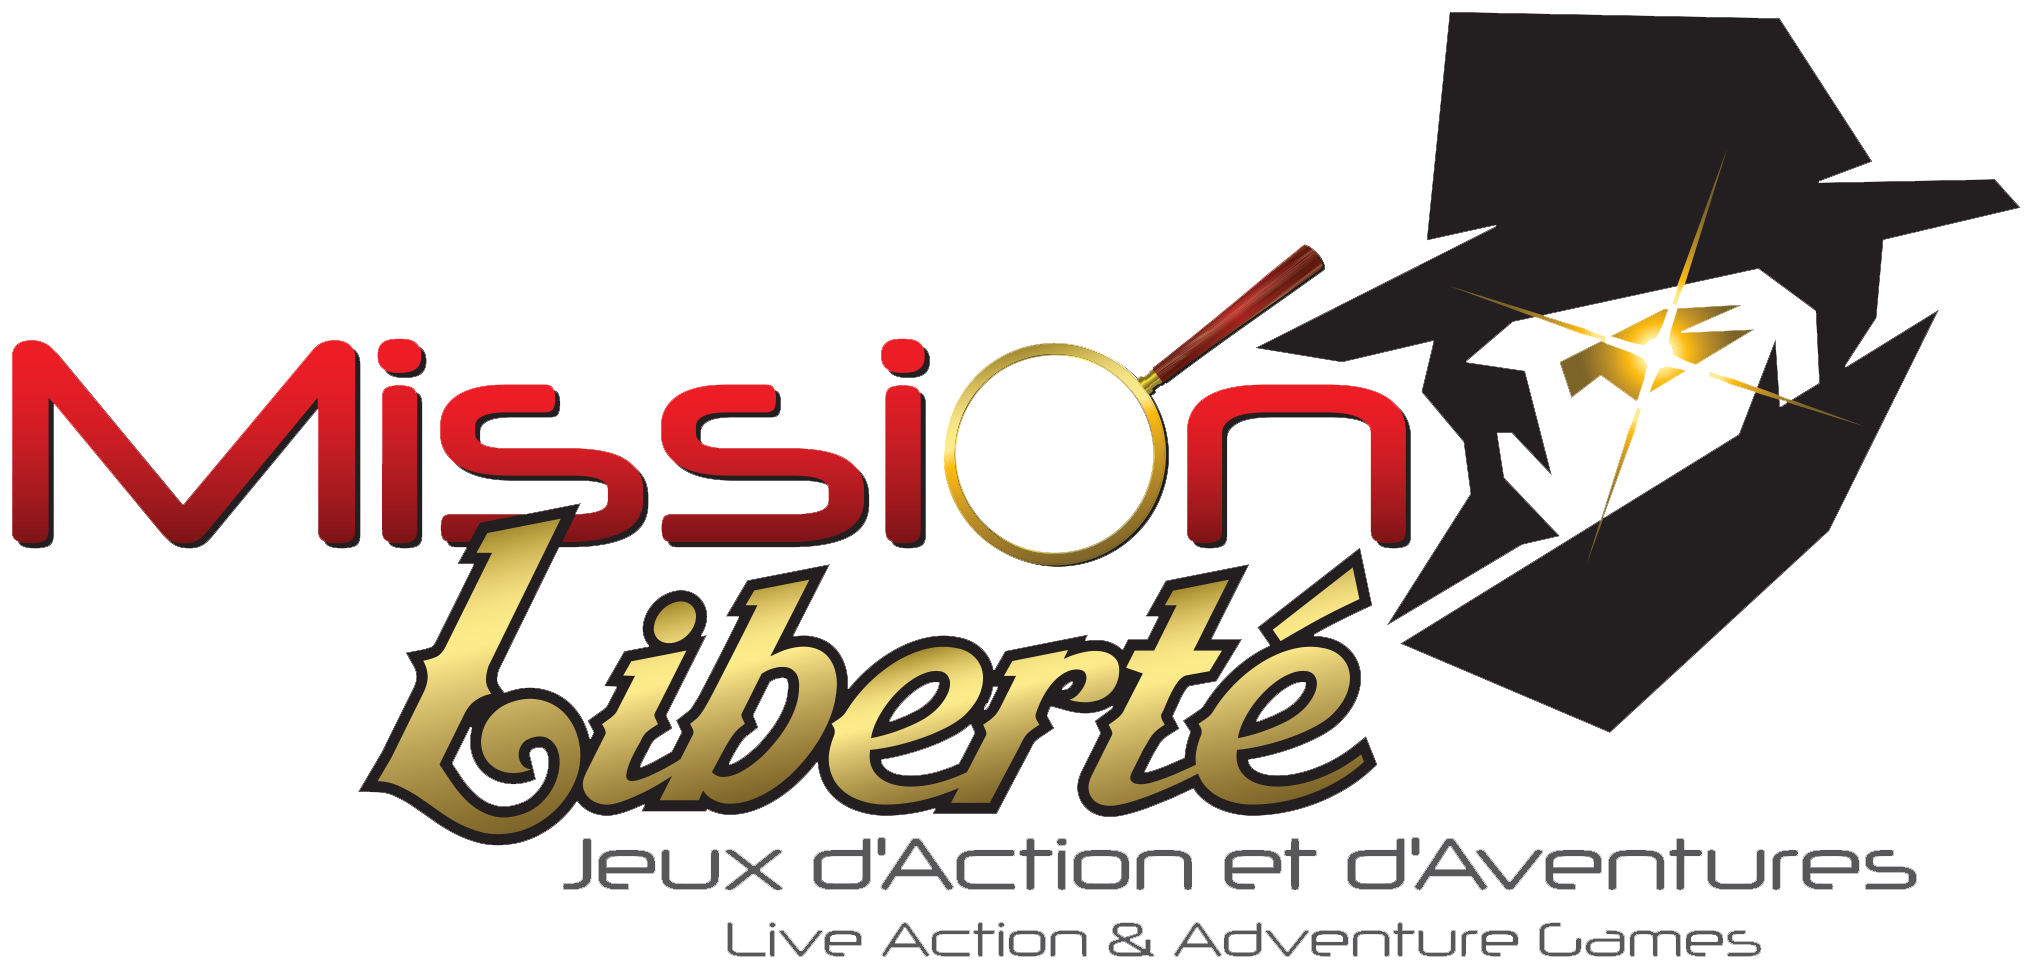 Mission libert logo. Missions clipart citizenship canadian